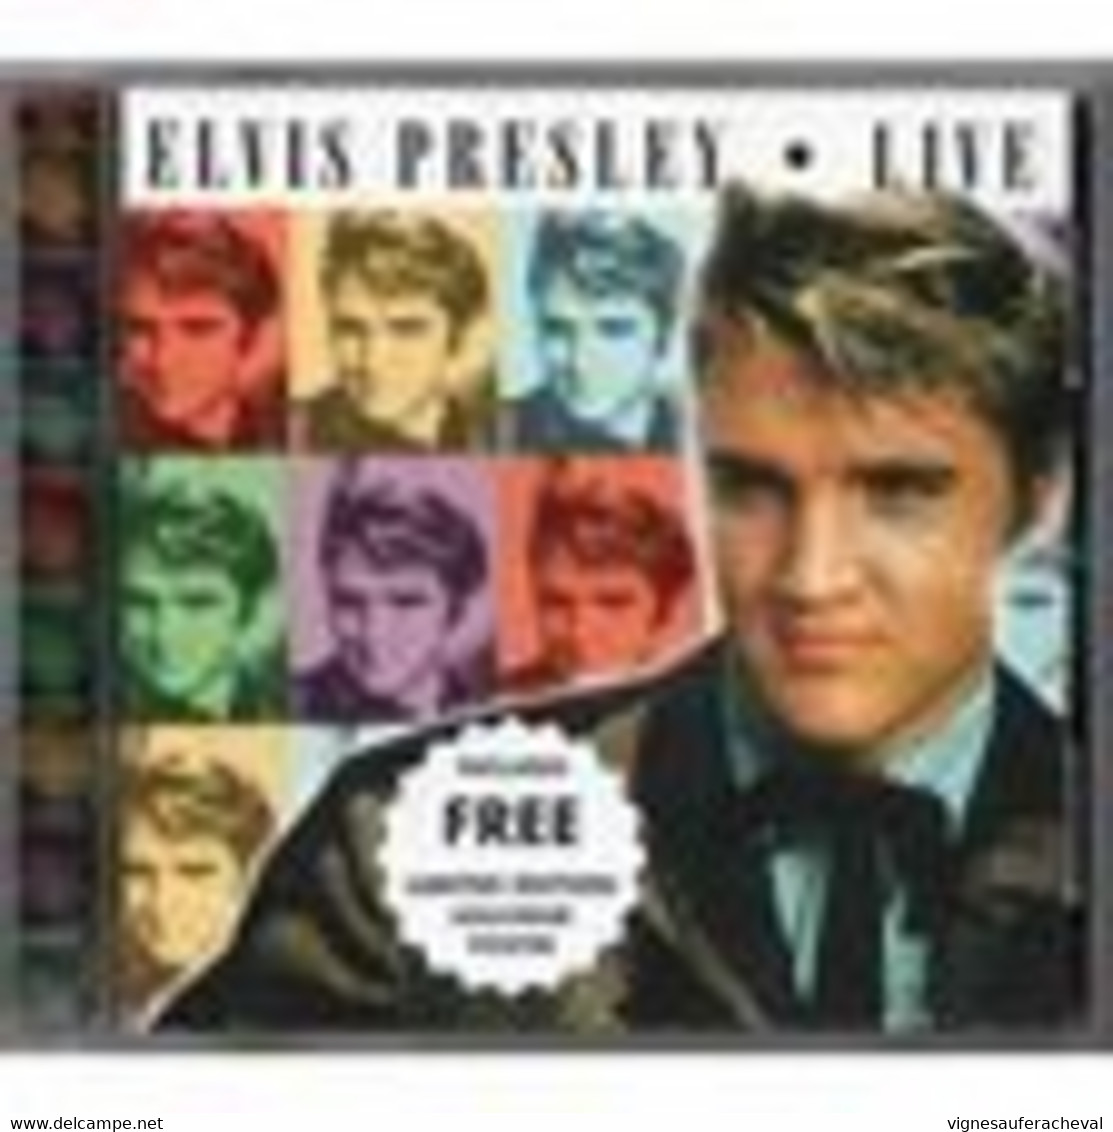 Elvis Presley- Live - Soul - R&B